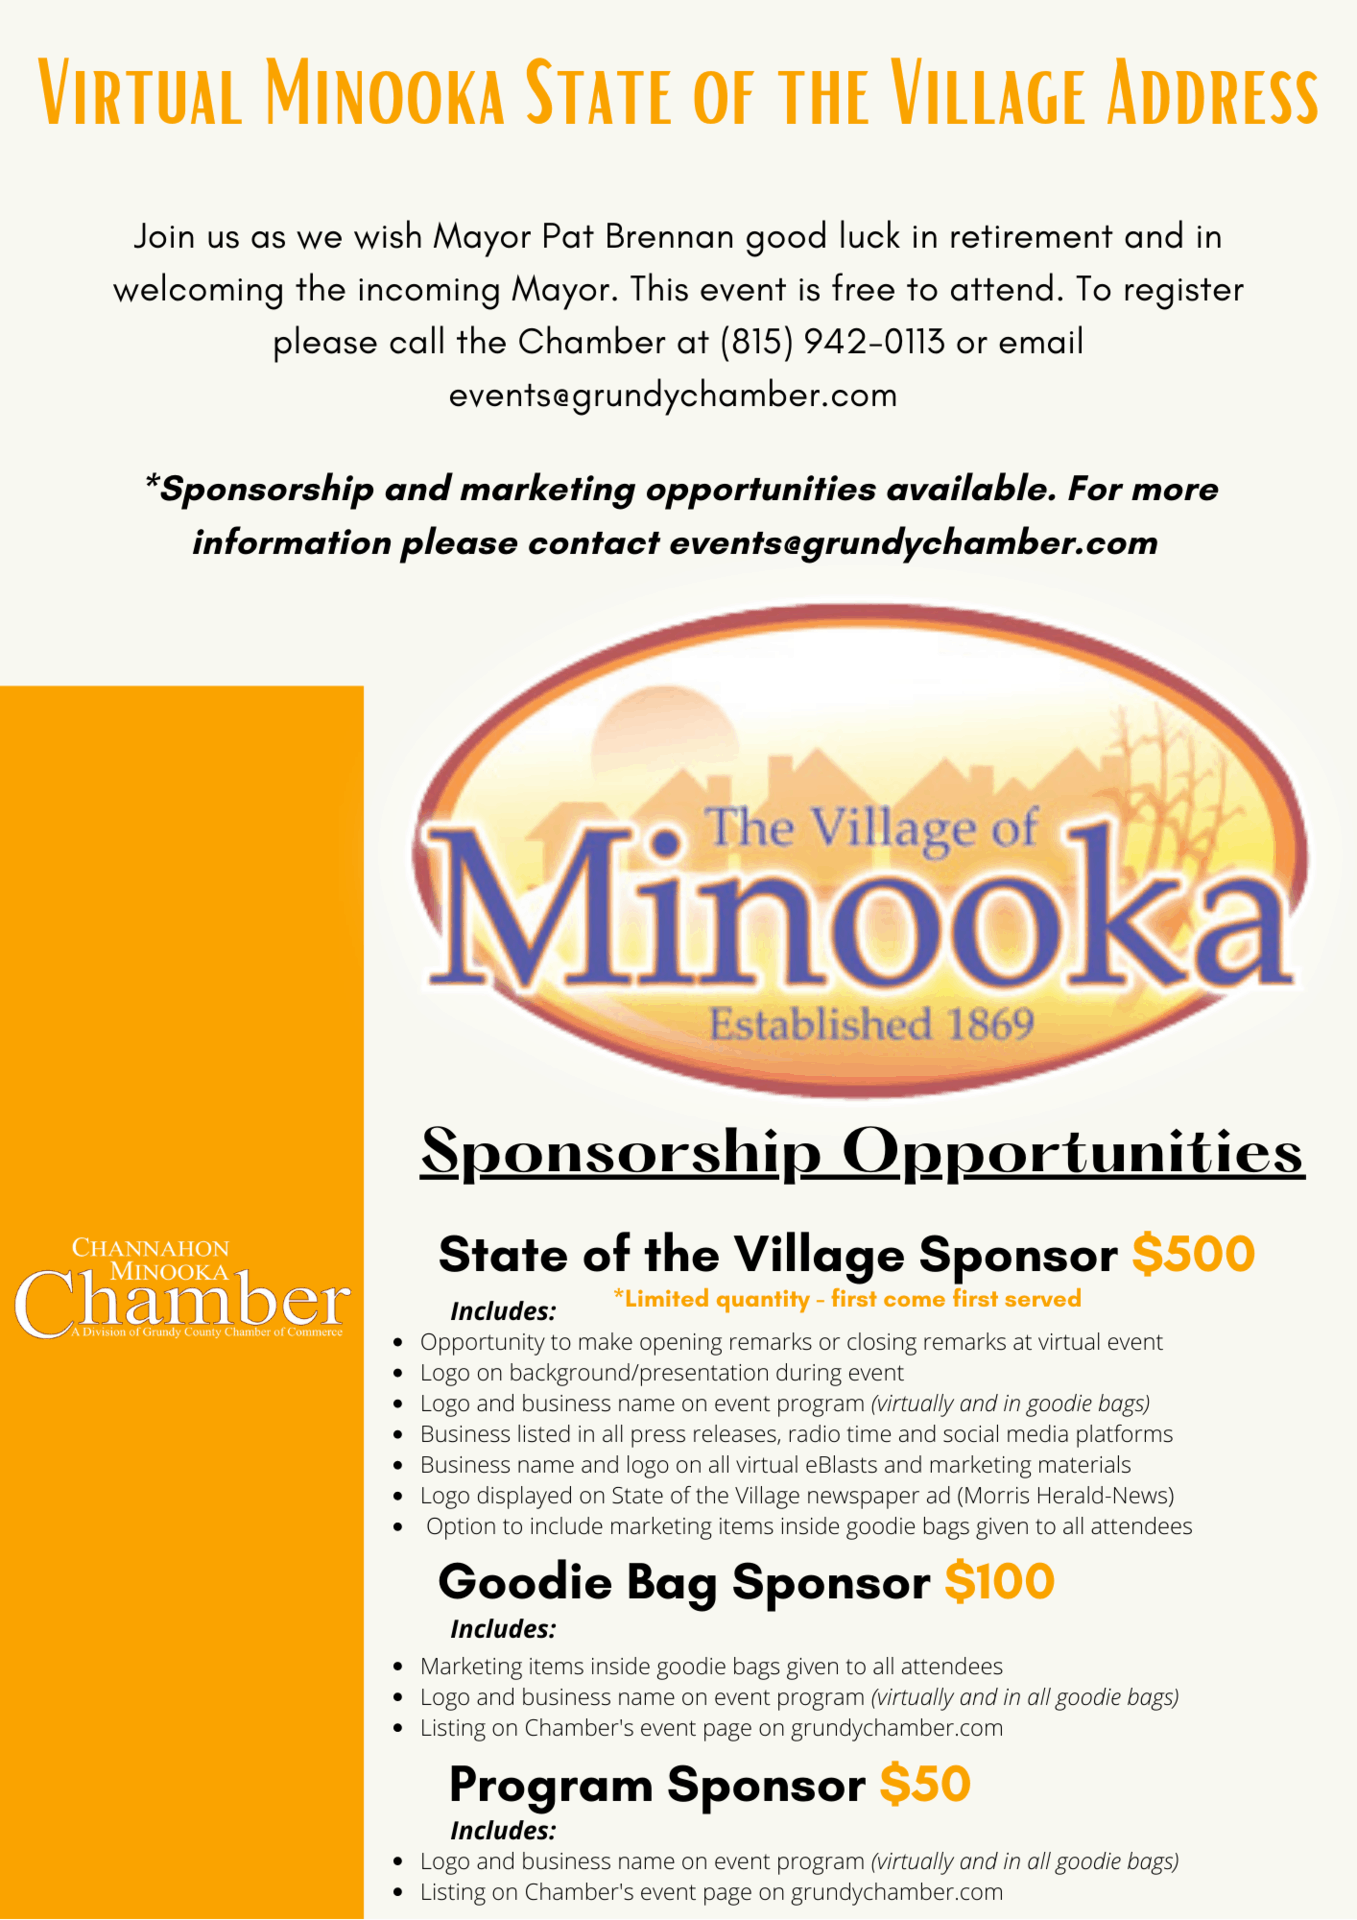 Minooka SOV Village Flyer - Marketing & Sponsorships 2021